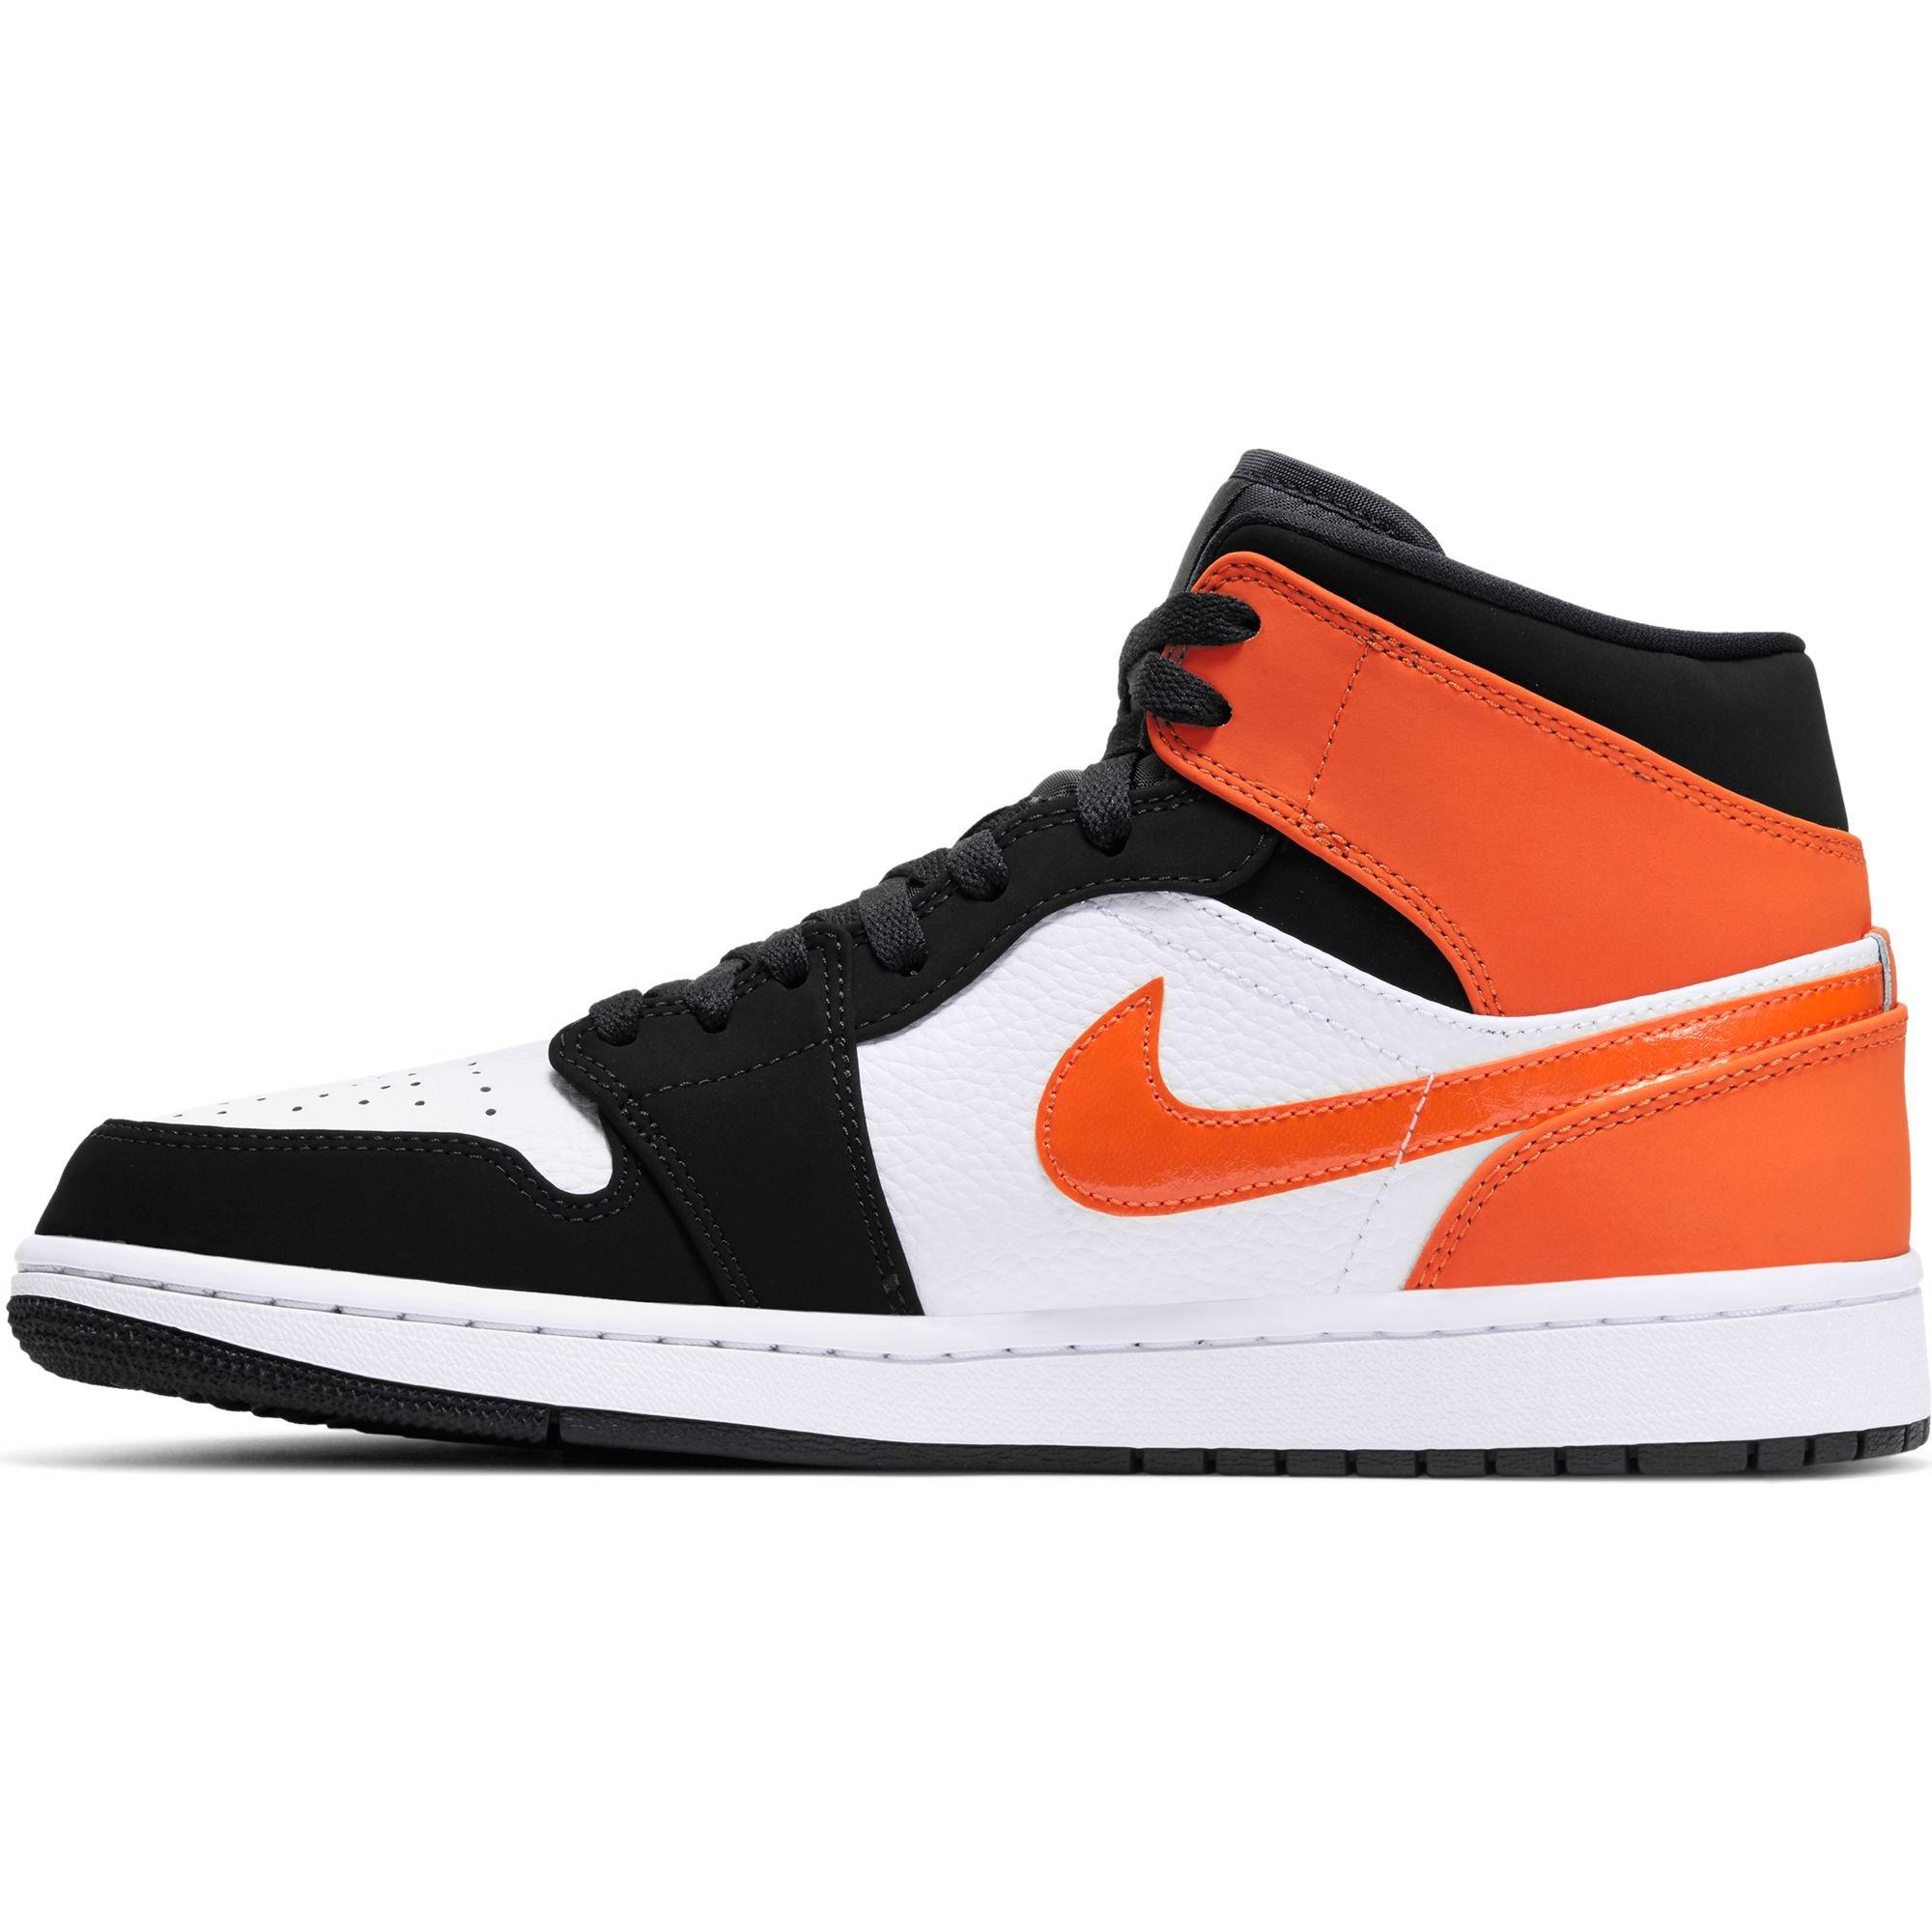 orange black and white air jordan 1s